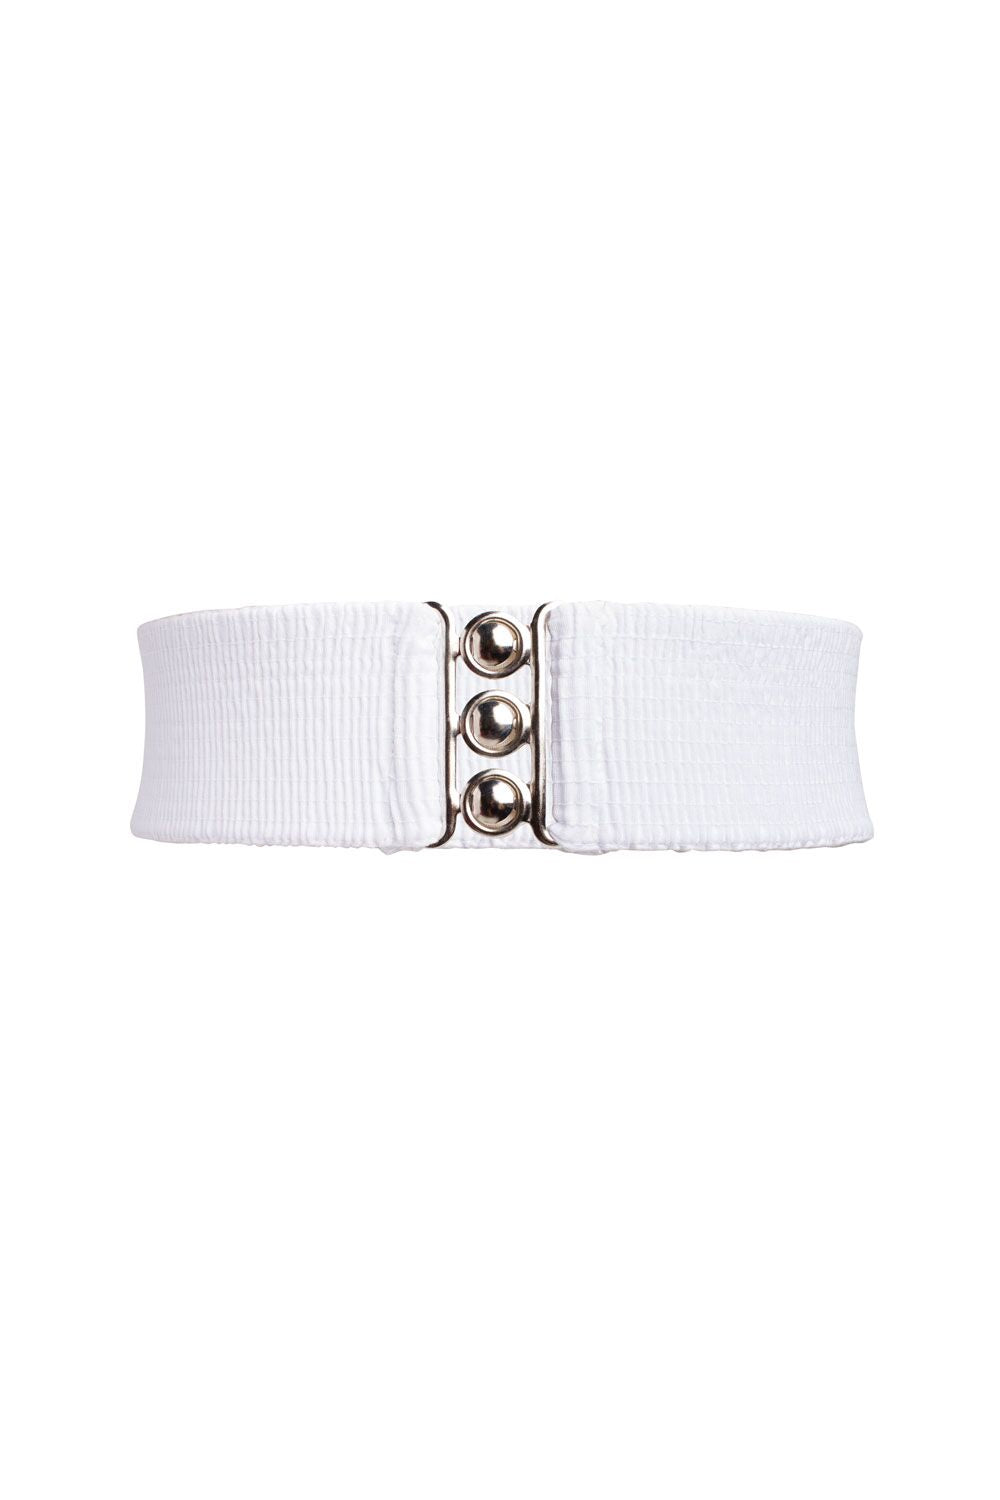 Lock It In Vintage Inspired Stretch Belt in White